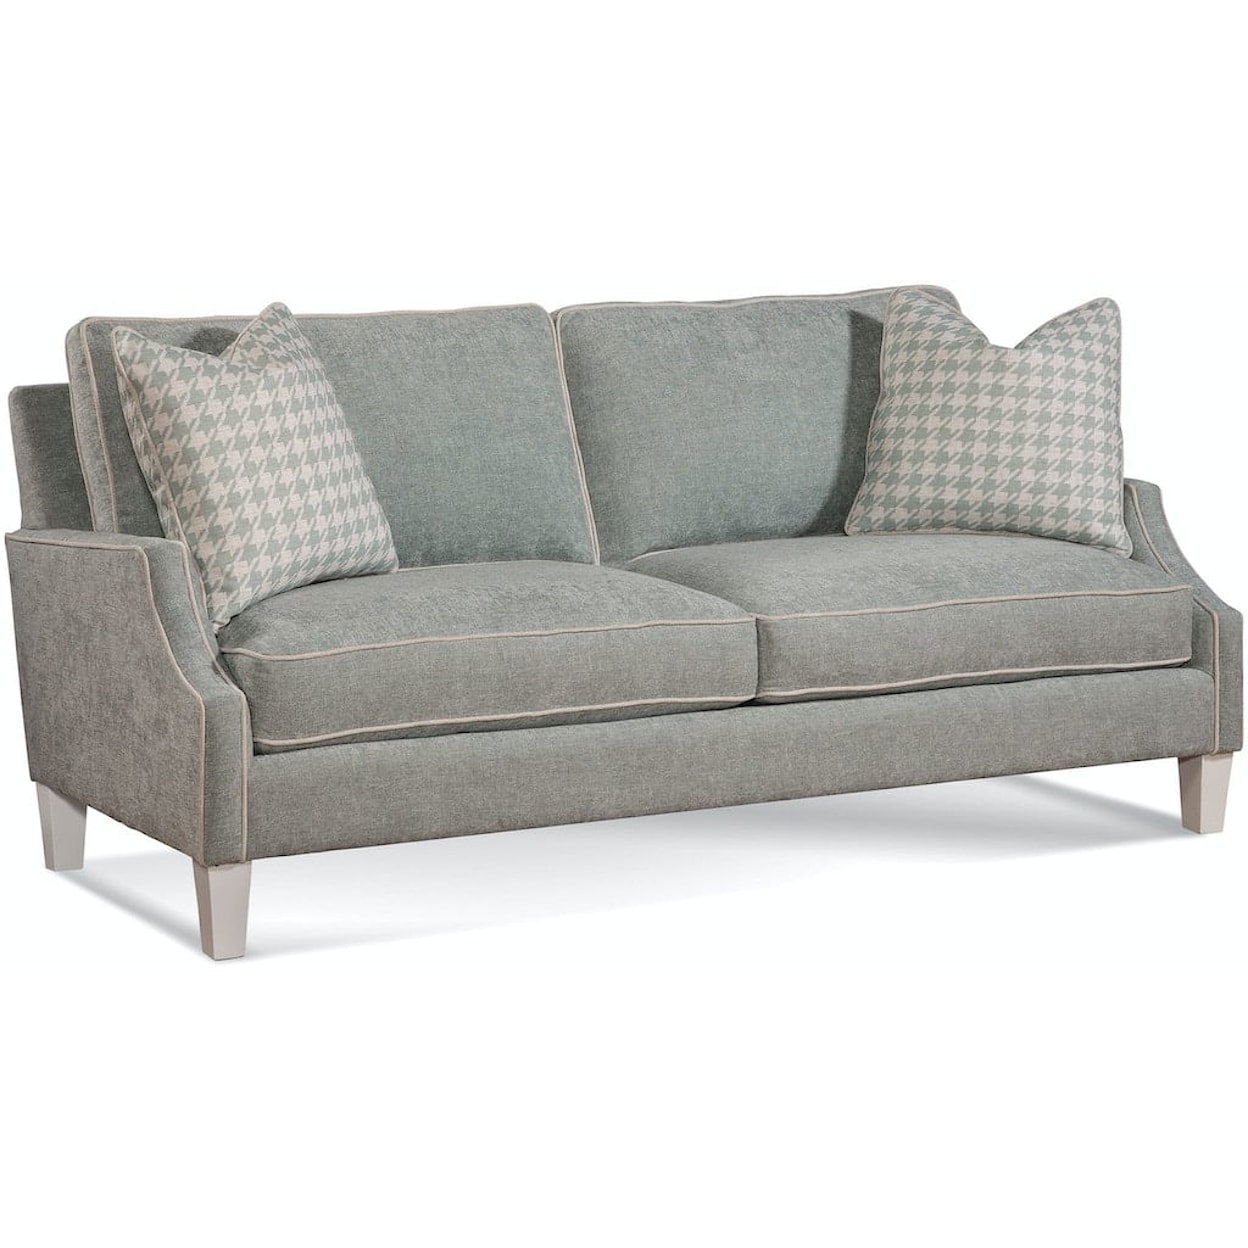 Braxton Culler Urban Options Urban Options Two Cushion Sofa